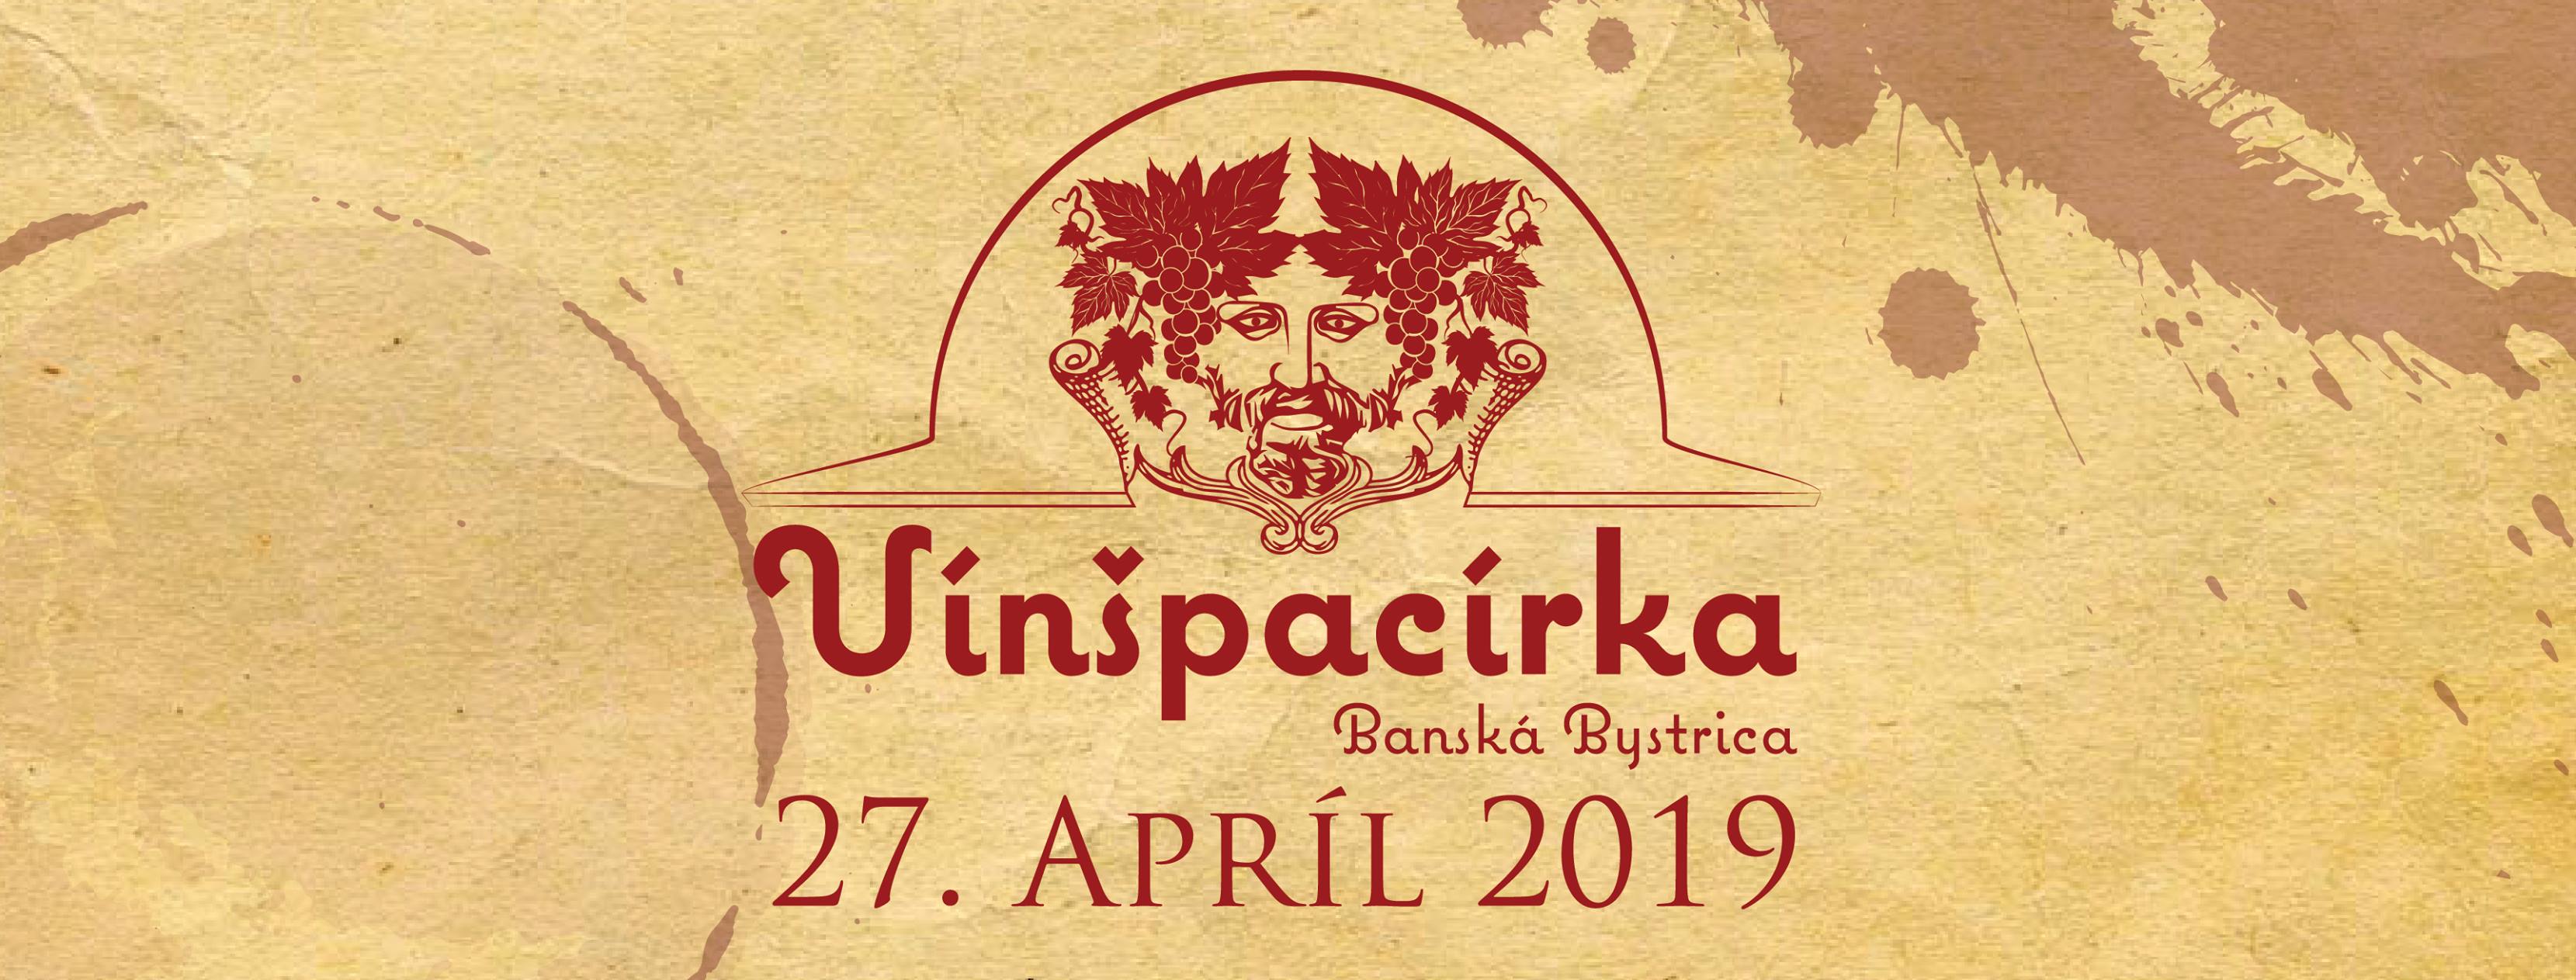 Vnpacrka 2019 Bansk Bysrica - 6. ronk